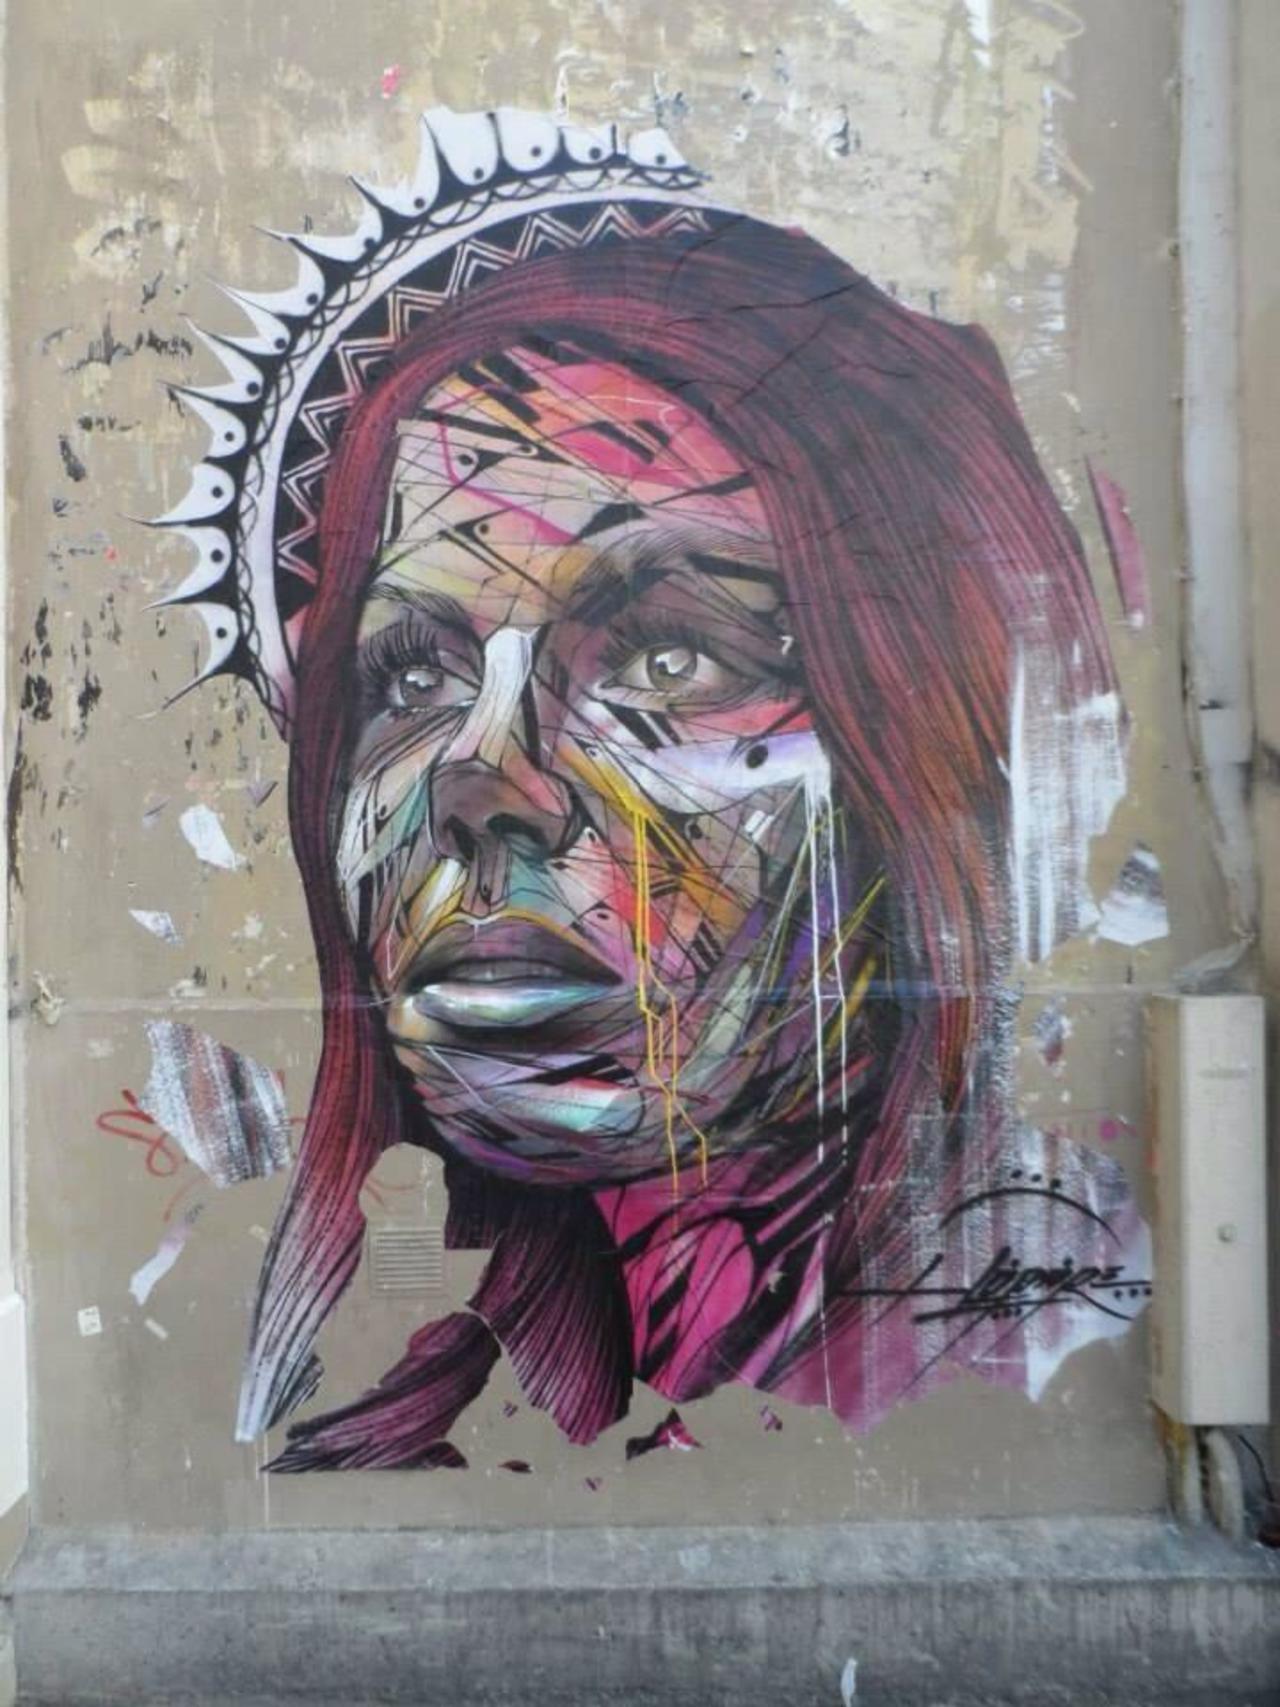 Artist Hopare new signature Street Art portrait located in Paris, France #art #mural #graffiti #streetart http://t.co/mtB11FtCsl